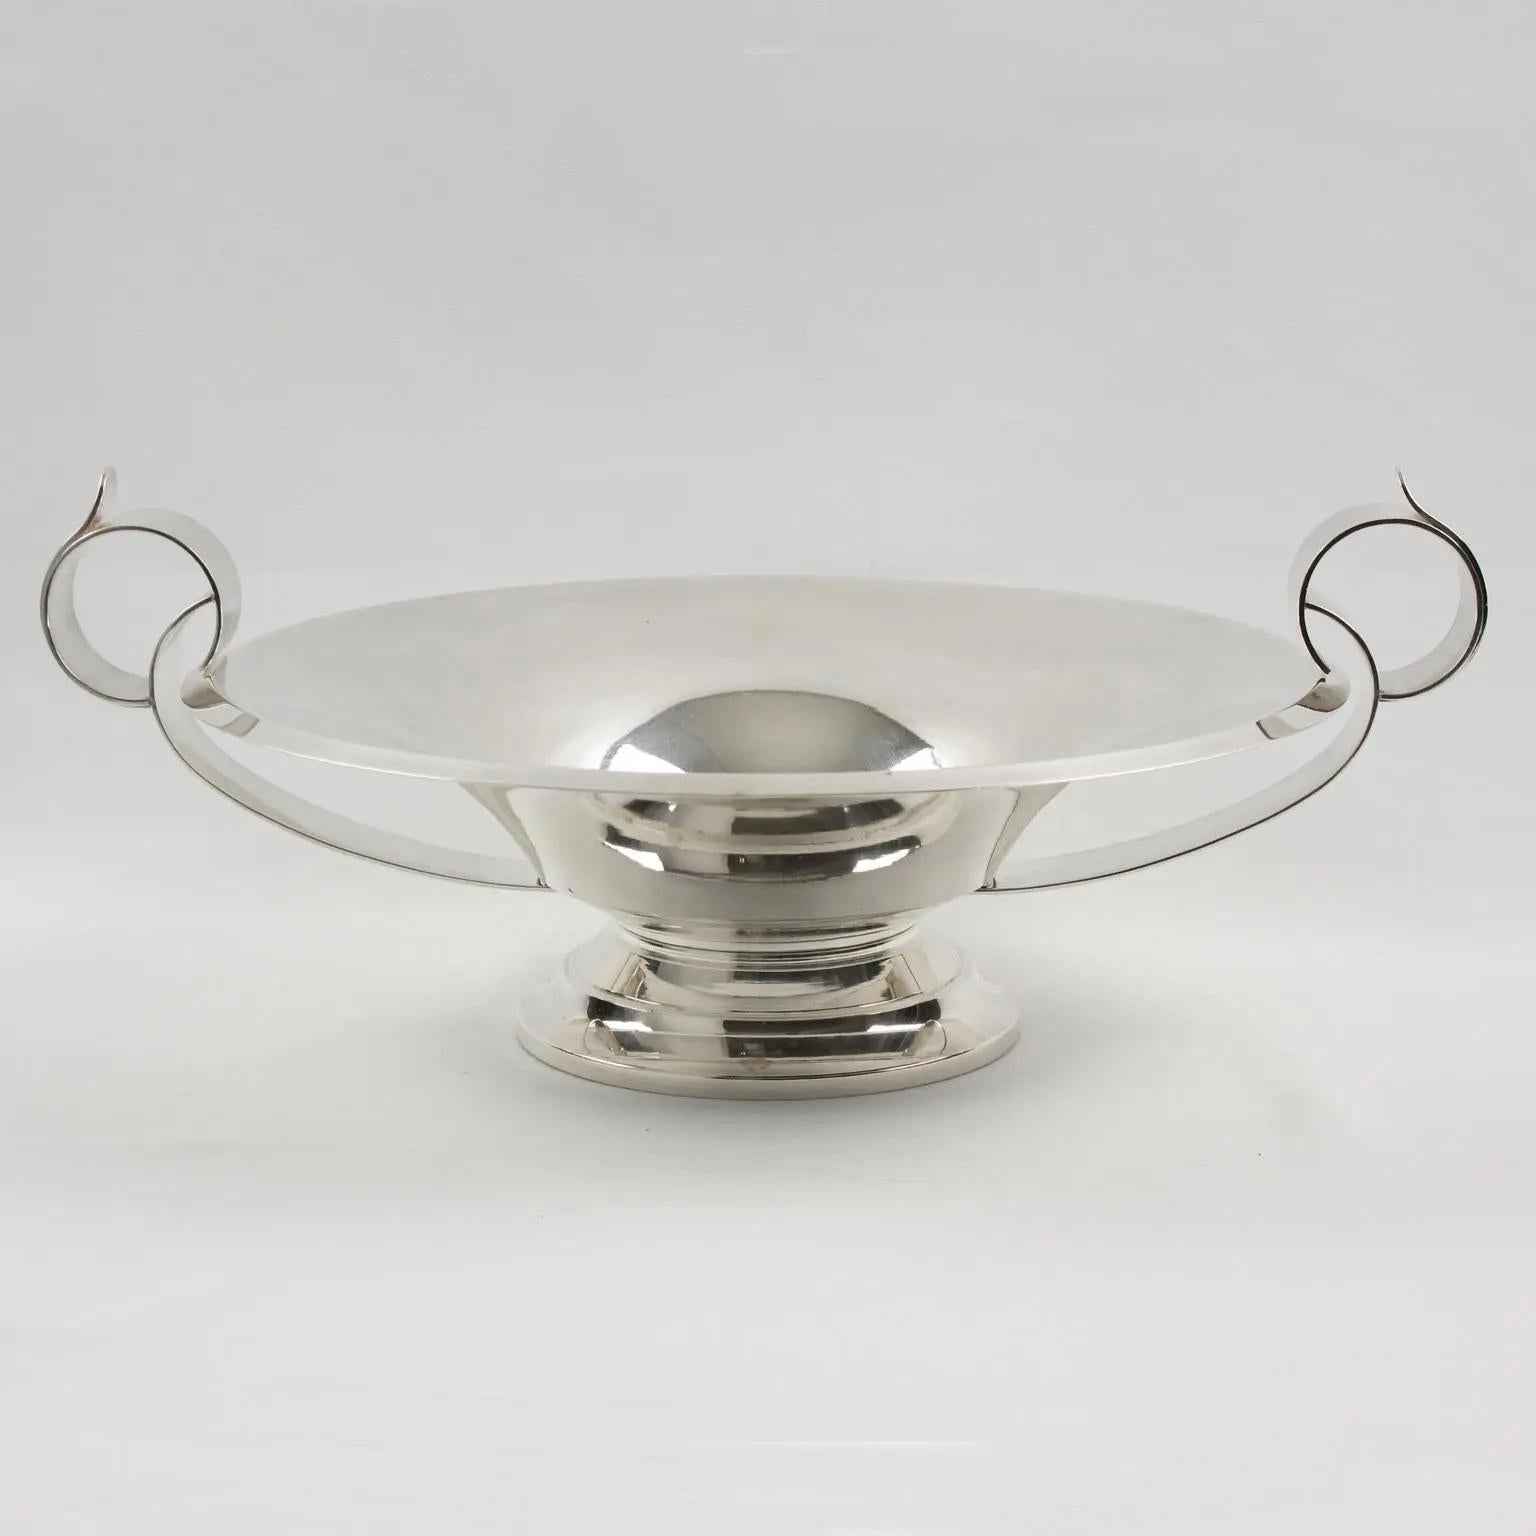 Mid-20th Century Art Deco Silver Plate Decorative Bowl Centerpiece, France 1930s For Sale